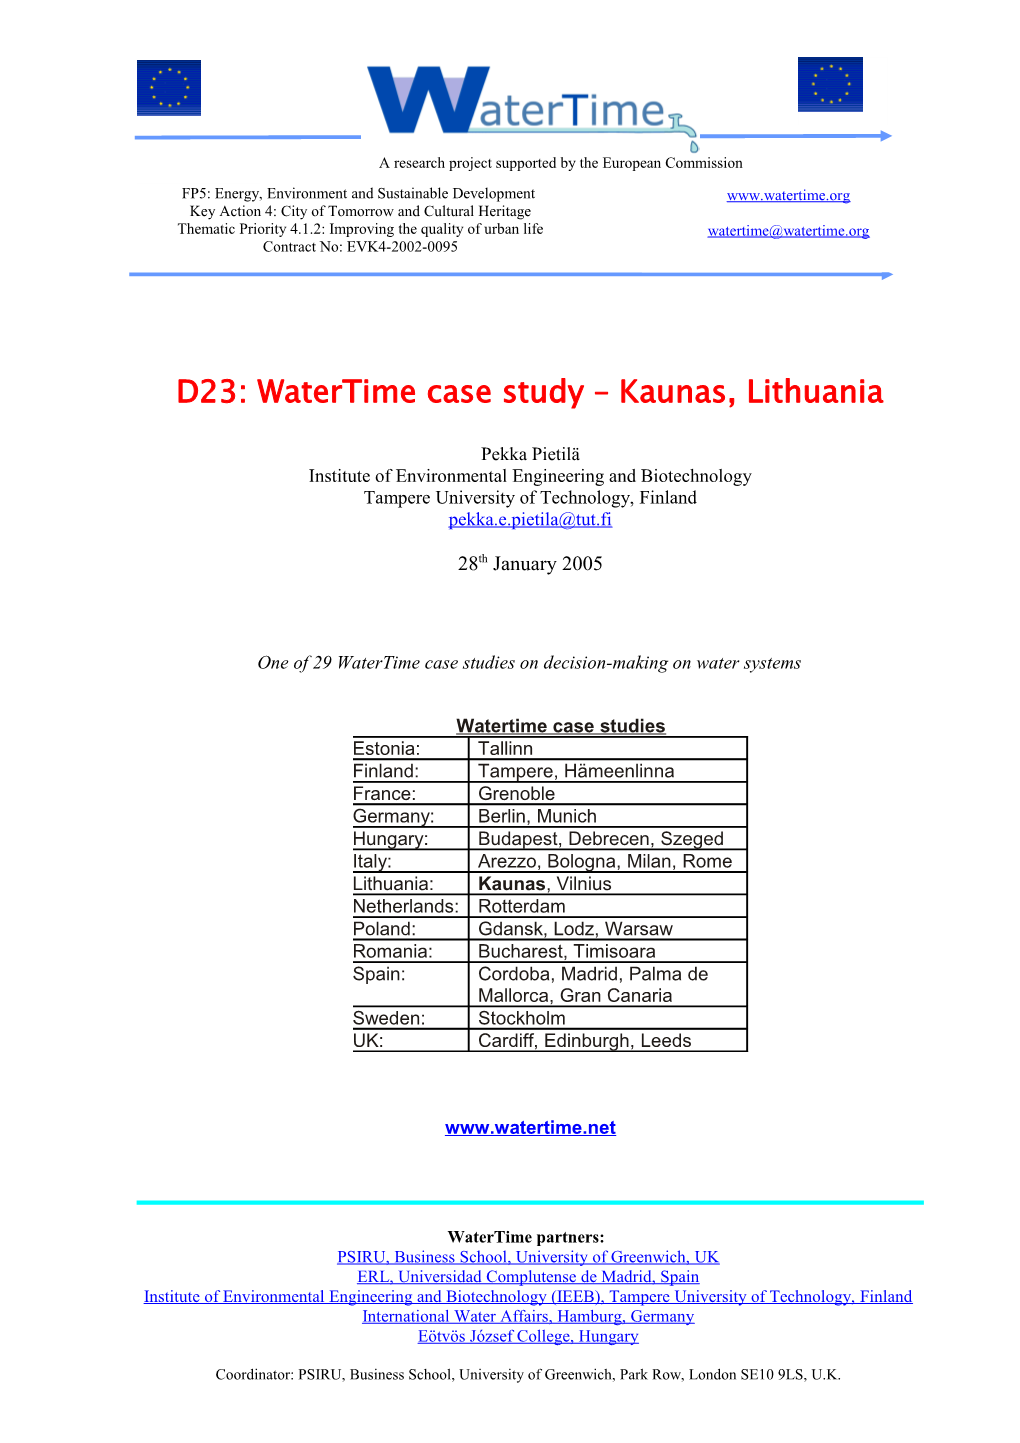 D23: Watertime Case Study Kaunas, Lithuania